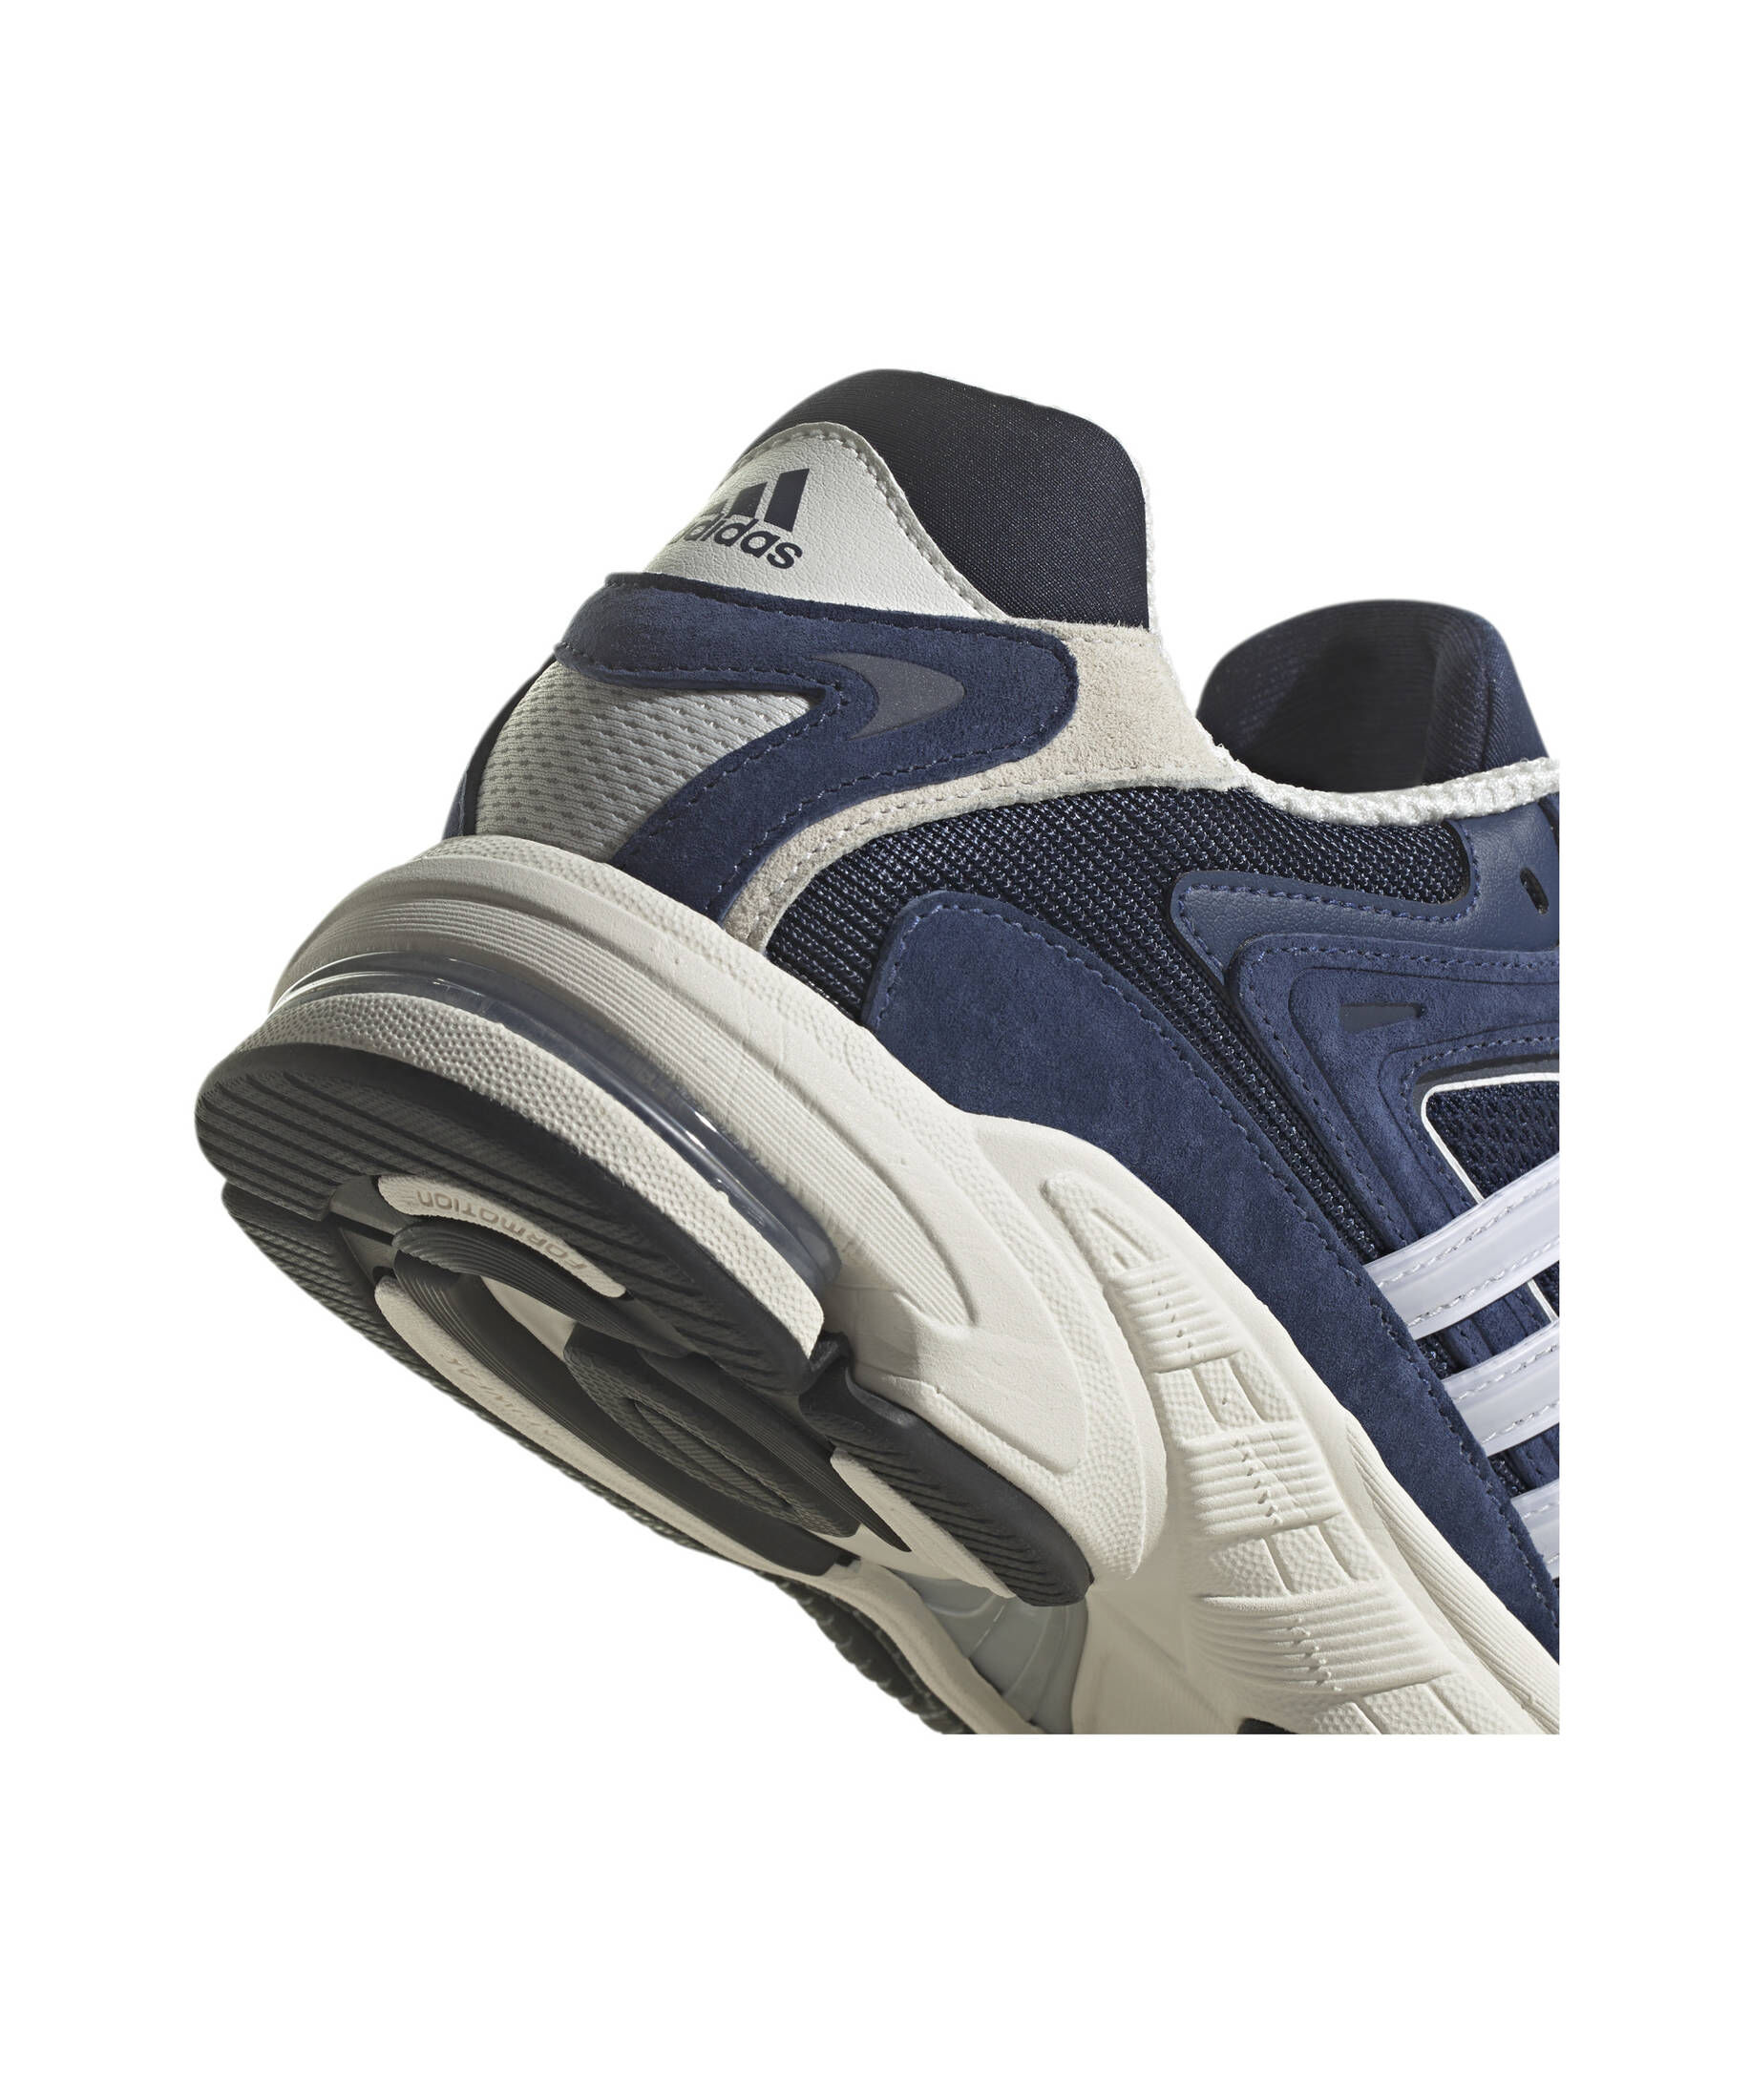 adidas Originals Herren Lifestyle - Sneakers Response | CL - Schuhe engelhorn Herren Beige kaufen